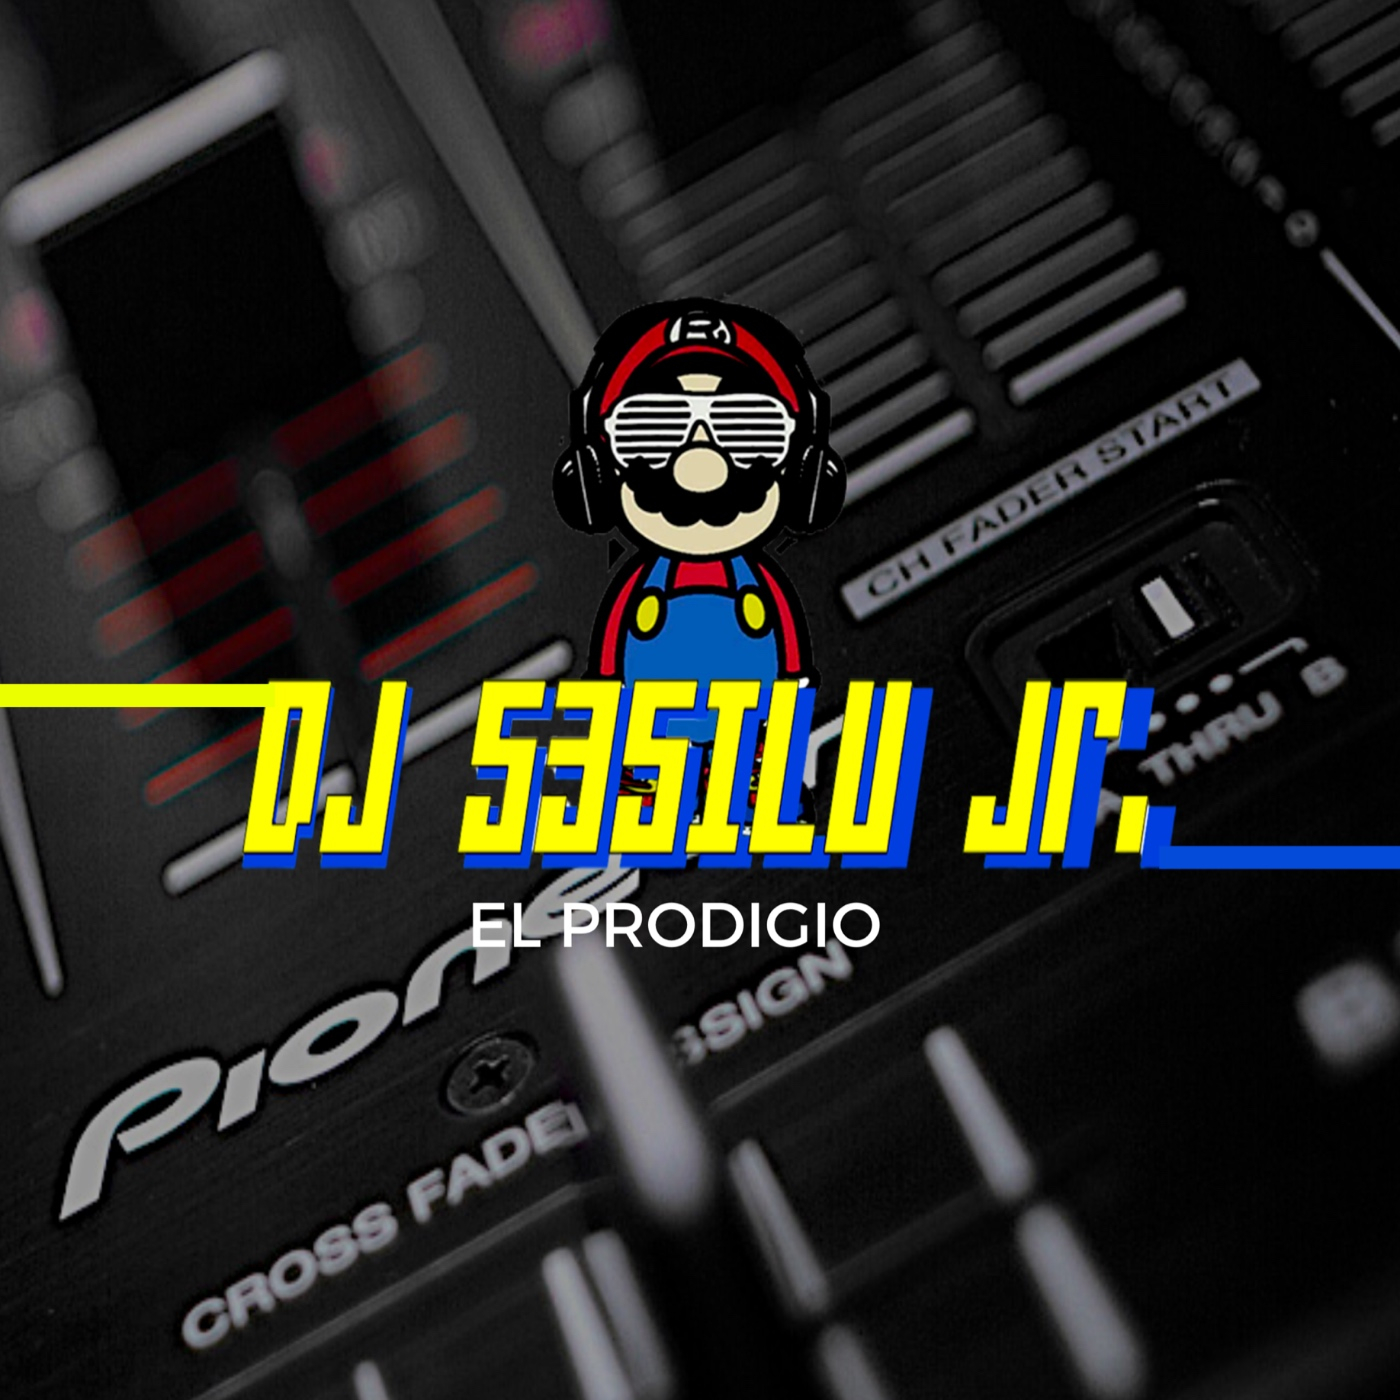 Reggaeton (perreo) mix by dj s3silu jr. in that mix pro507